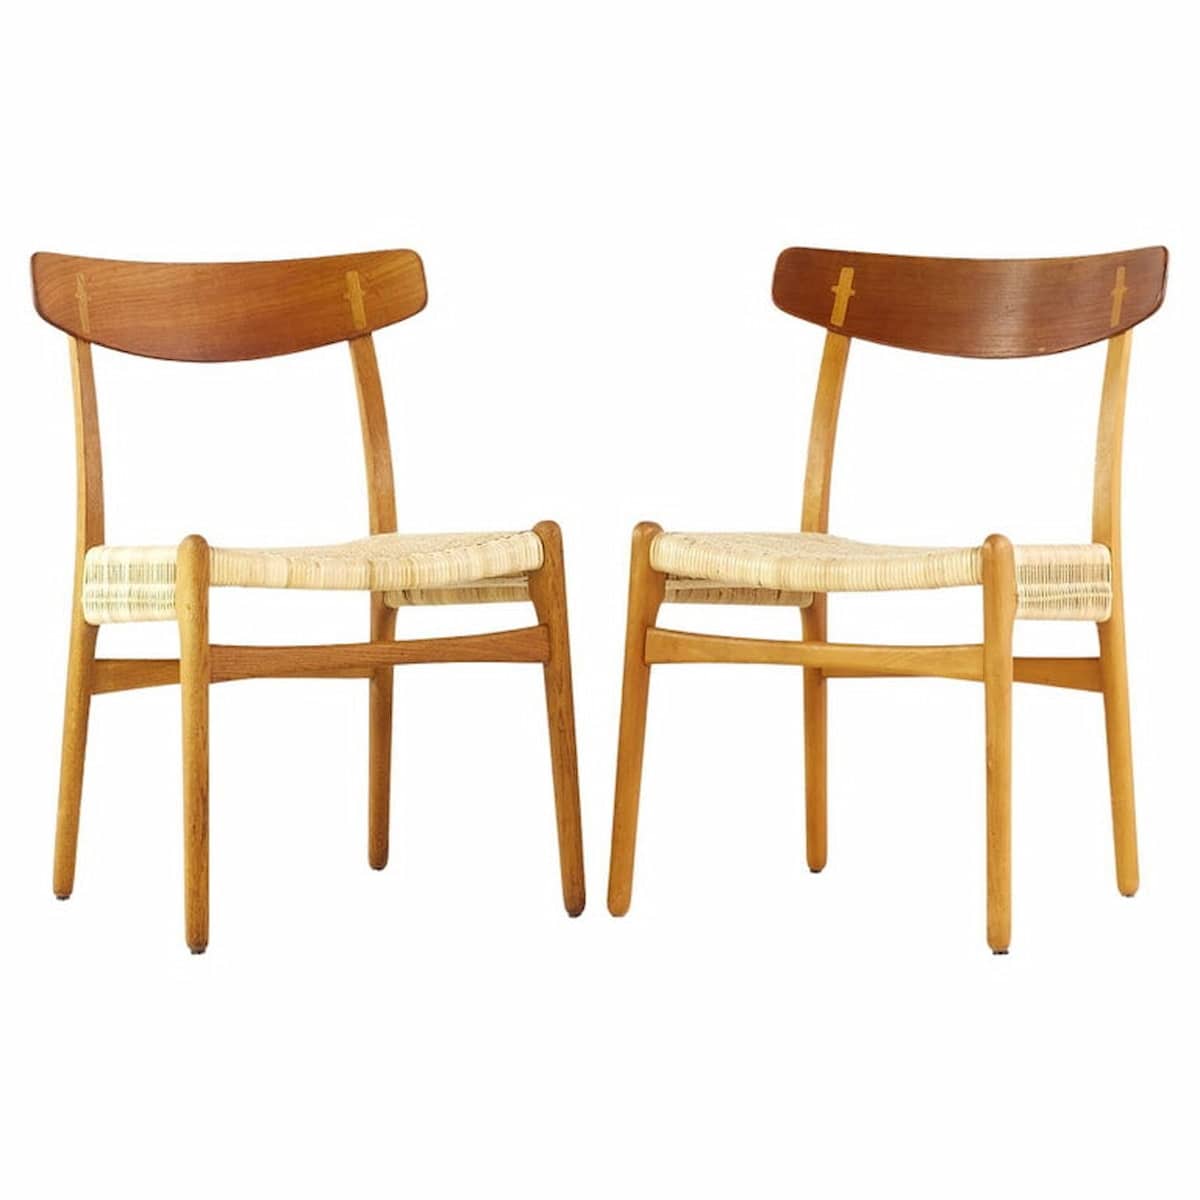 Hans Wegner for Carl Hansen and Son Mid Century Teak Ch23 Dining Chairs - Pair